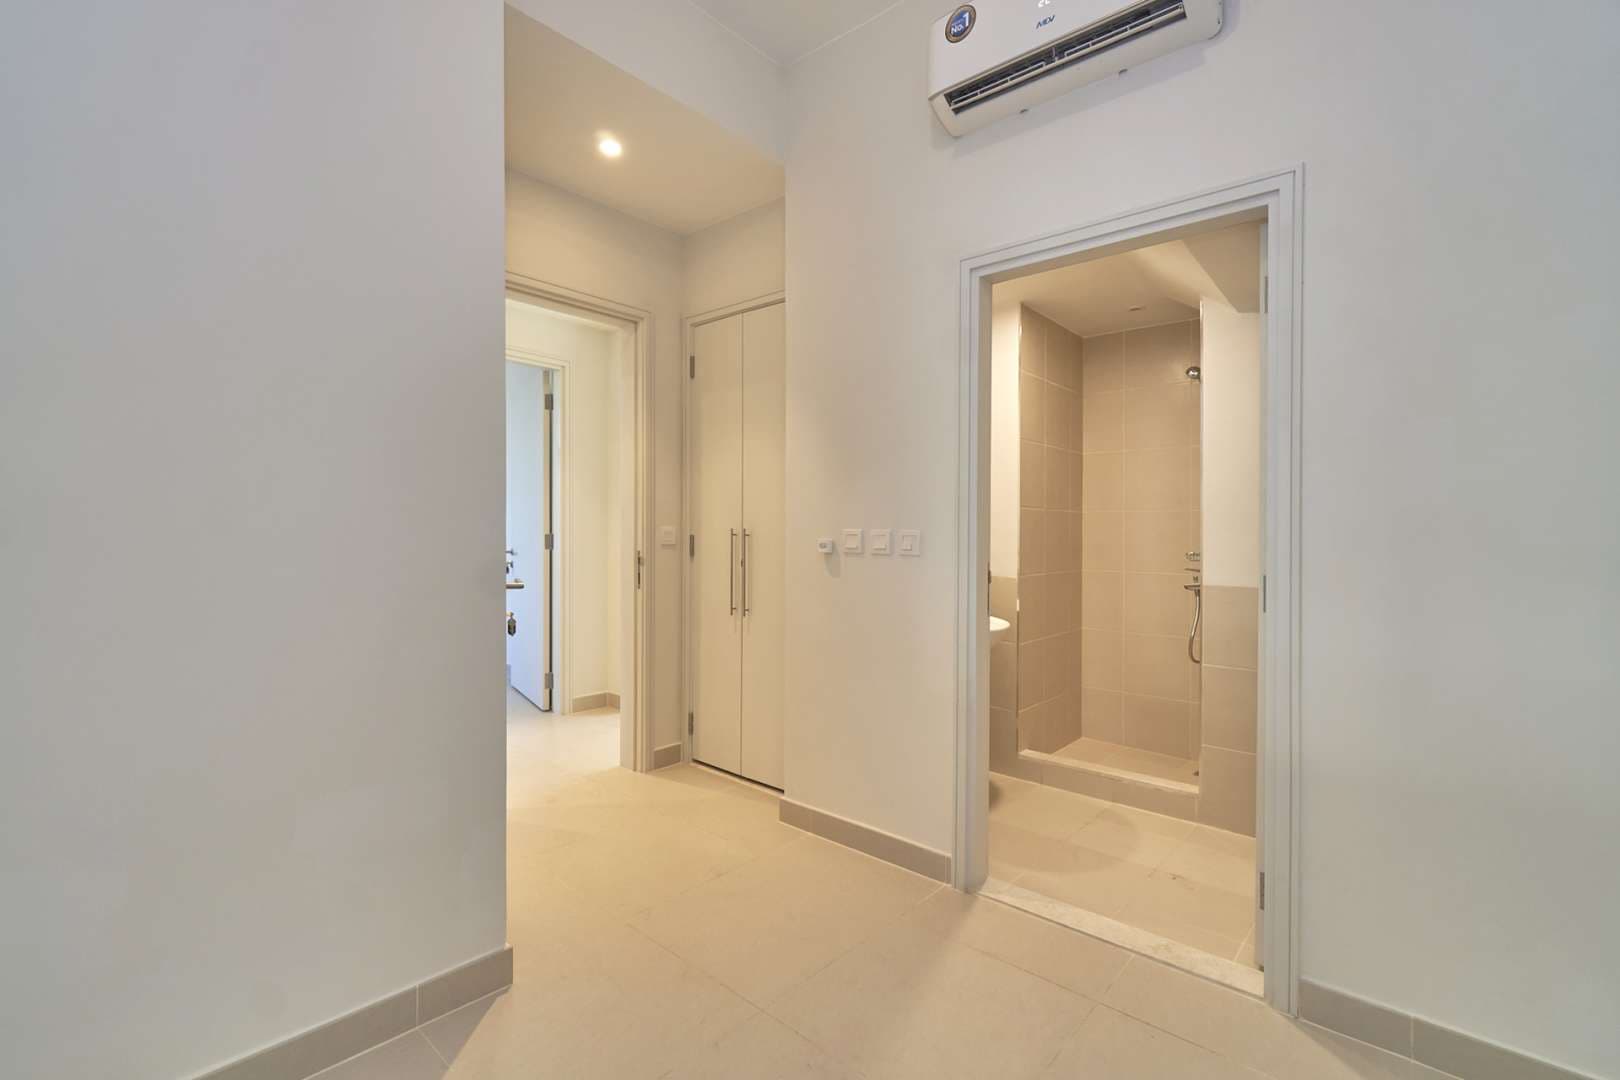 5 Bedroom Townhouse For Sale Maple At Dubai Hills Estate Lp08617 1df8c2632c91e300.jpg